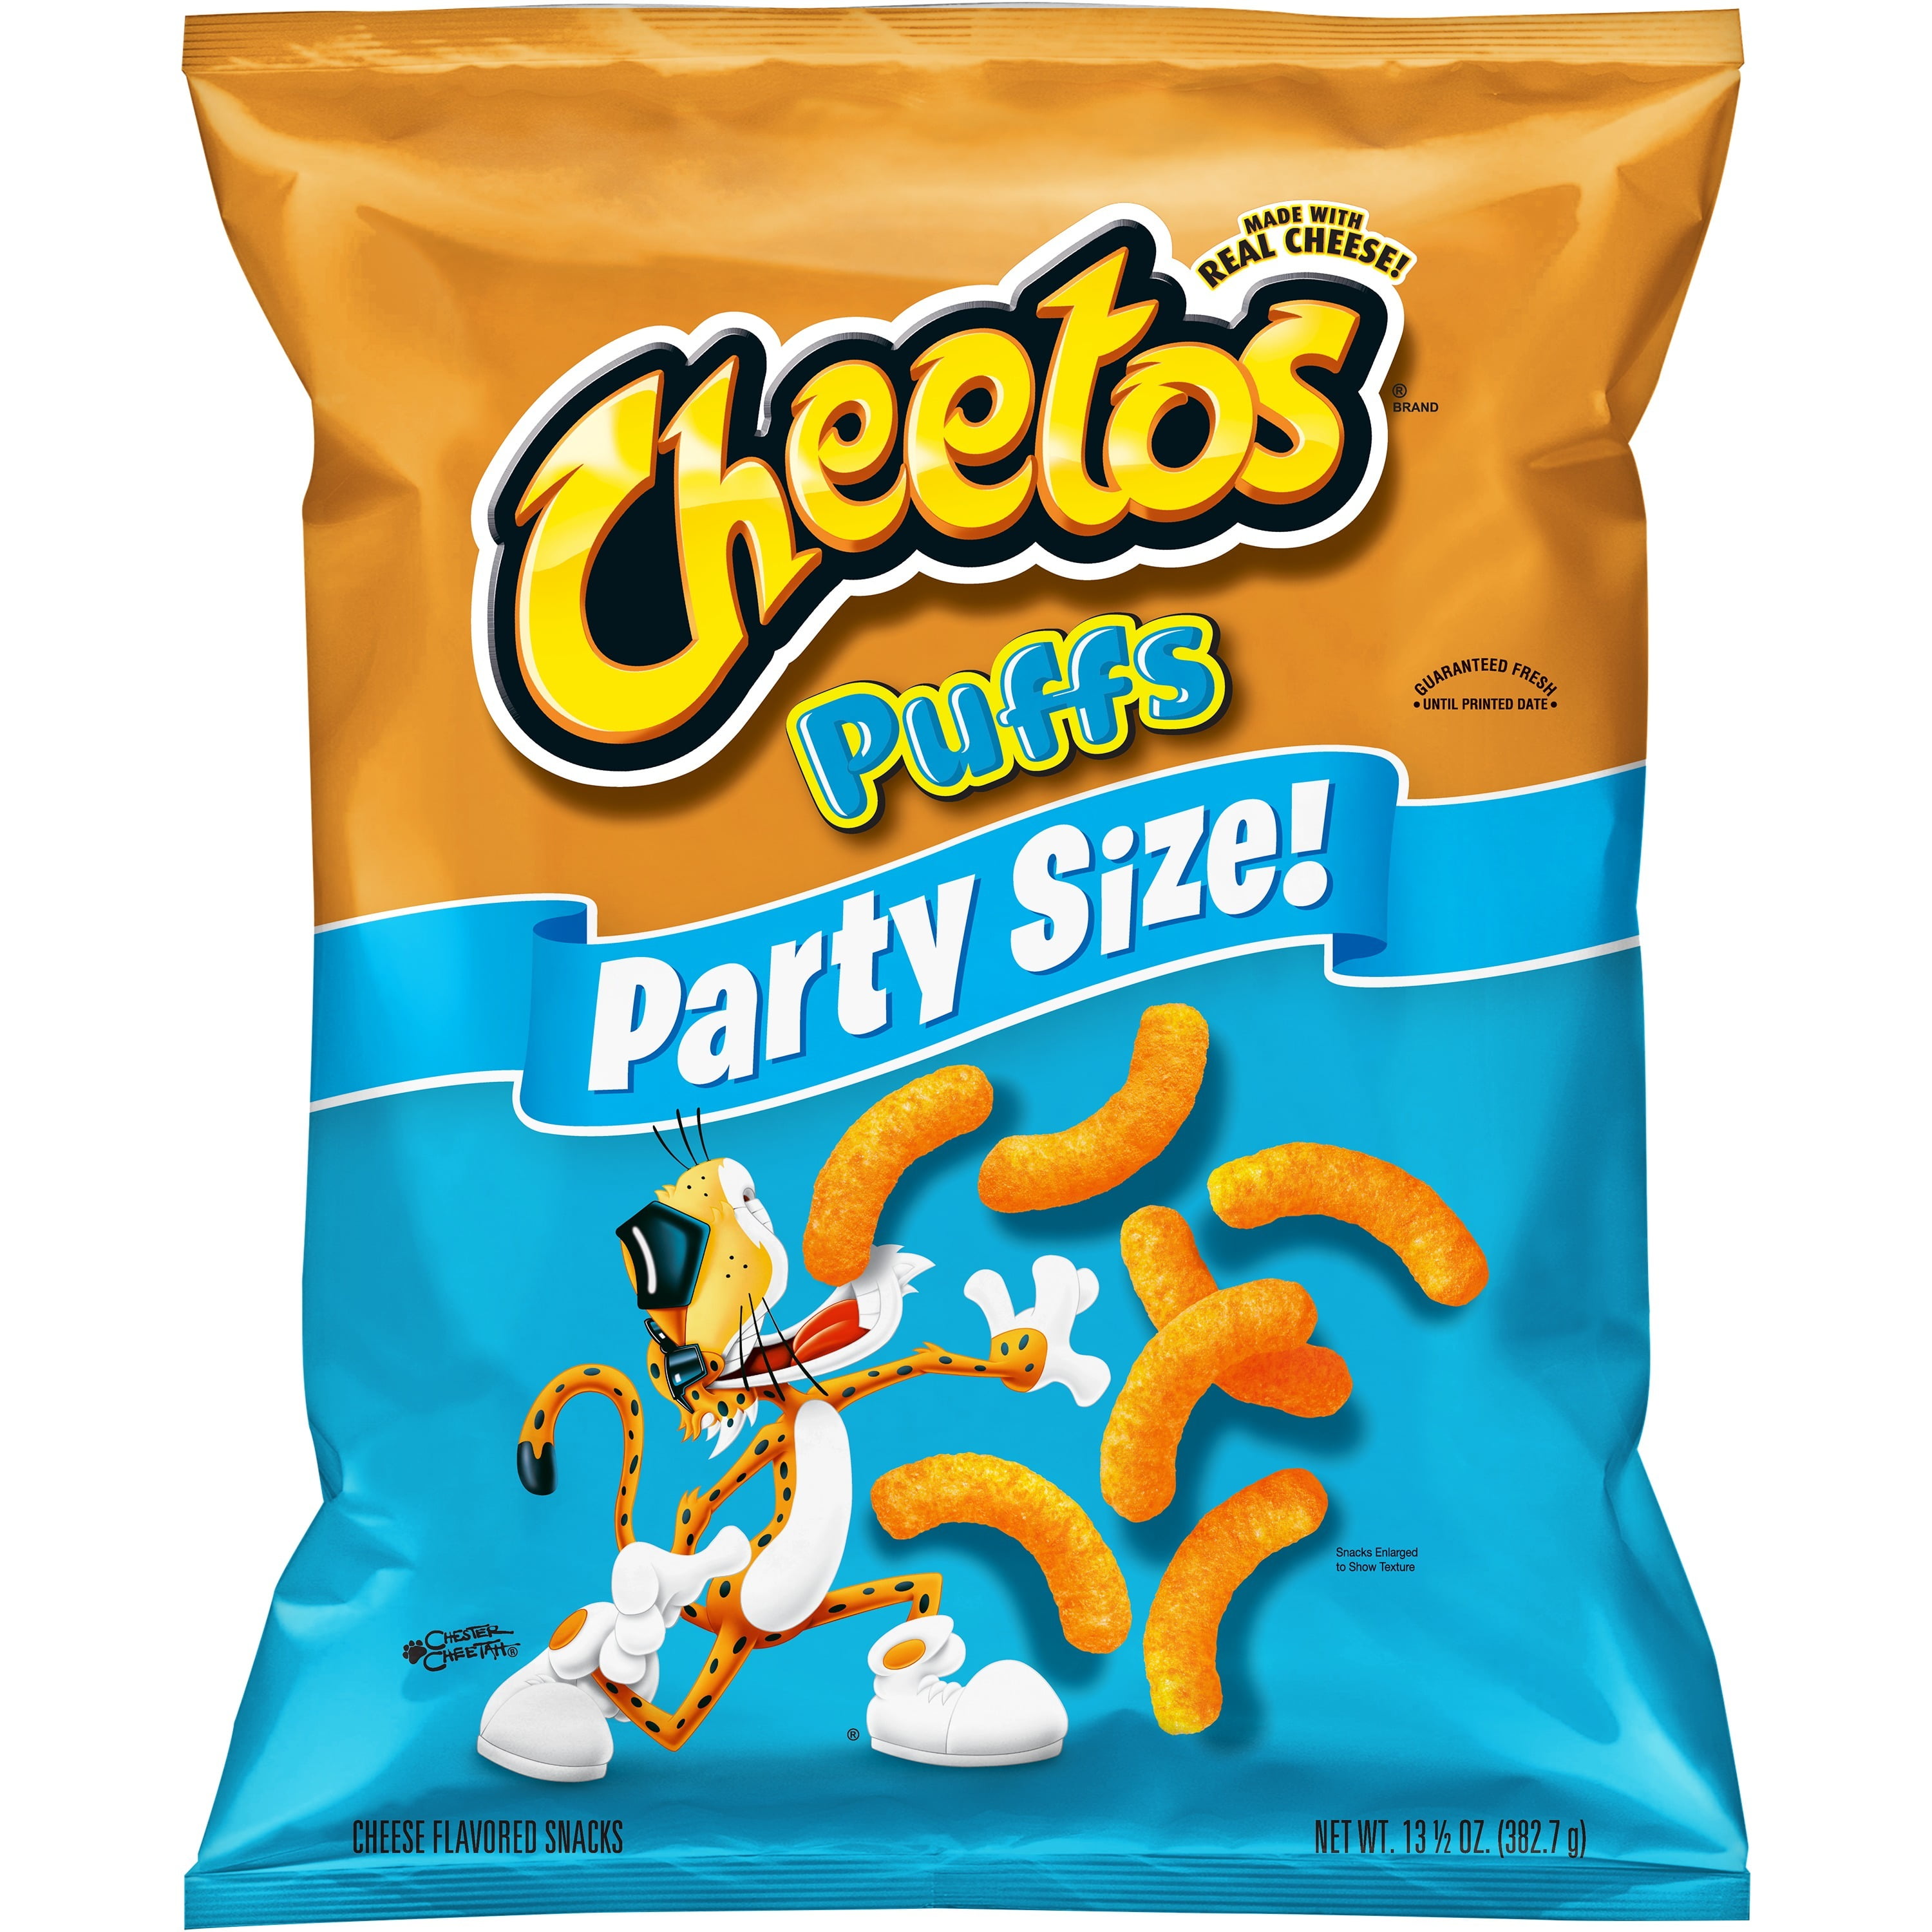 Cheetos Puffs Cheese Flavored Snacks, Party Size, 13.5 oz Bag, Wal-mart, Wa...